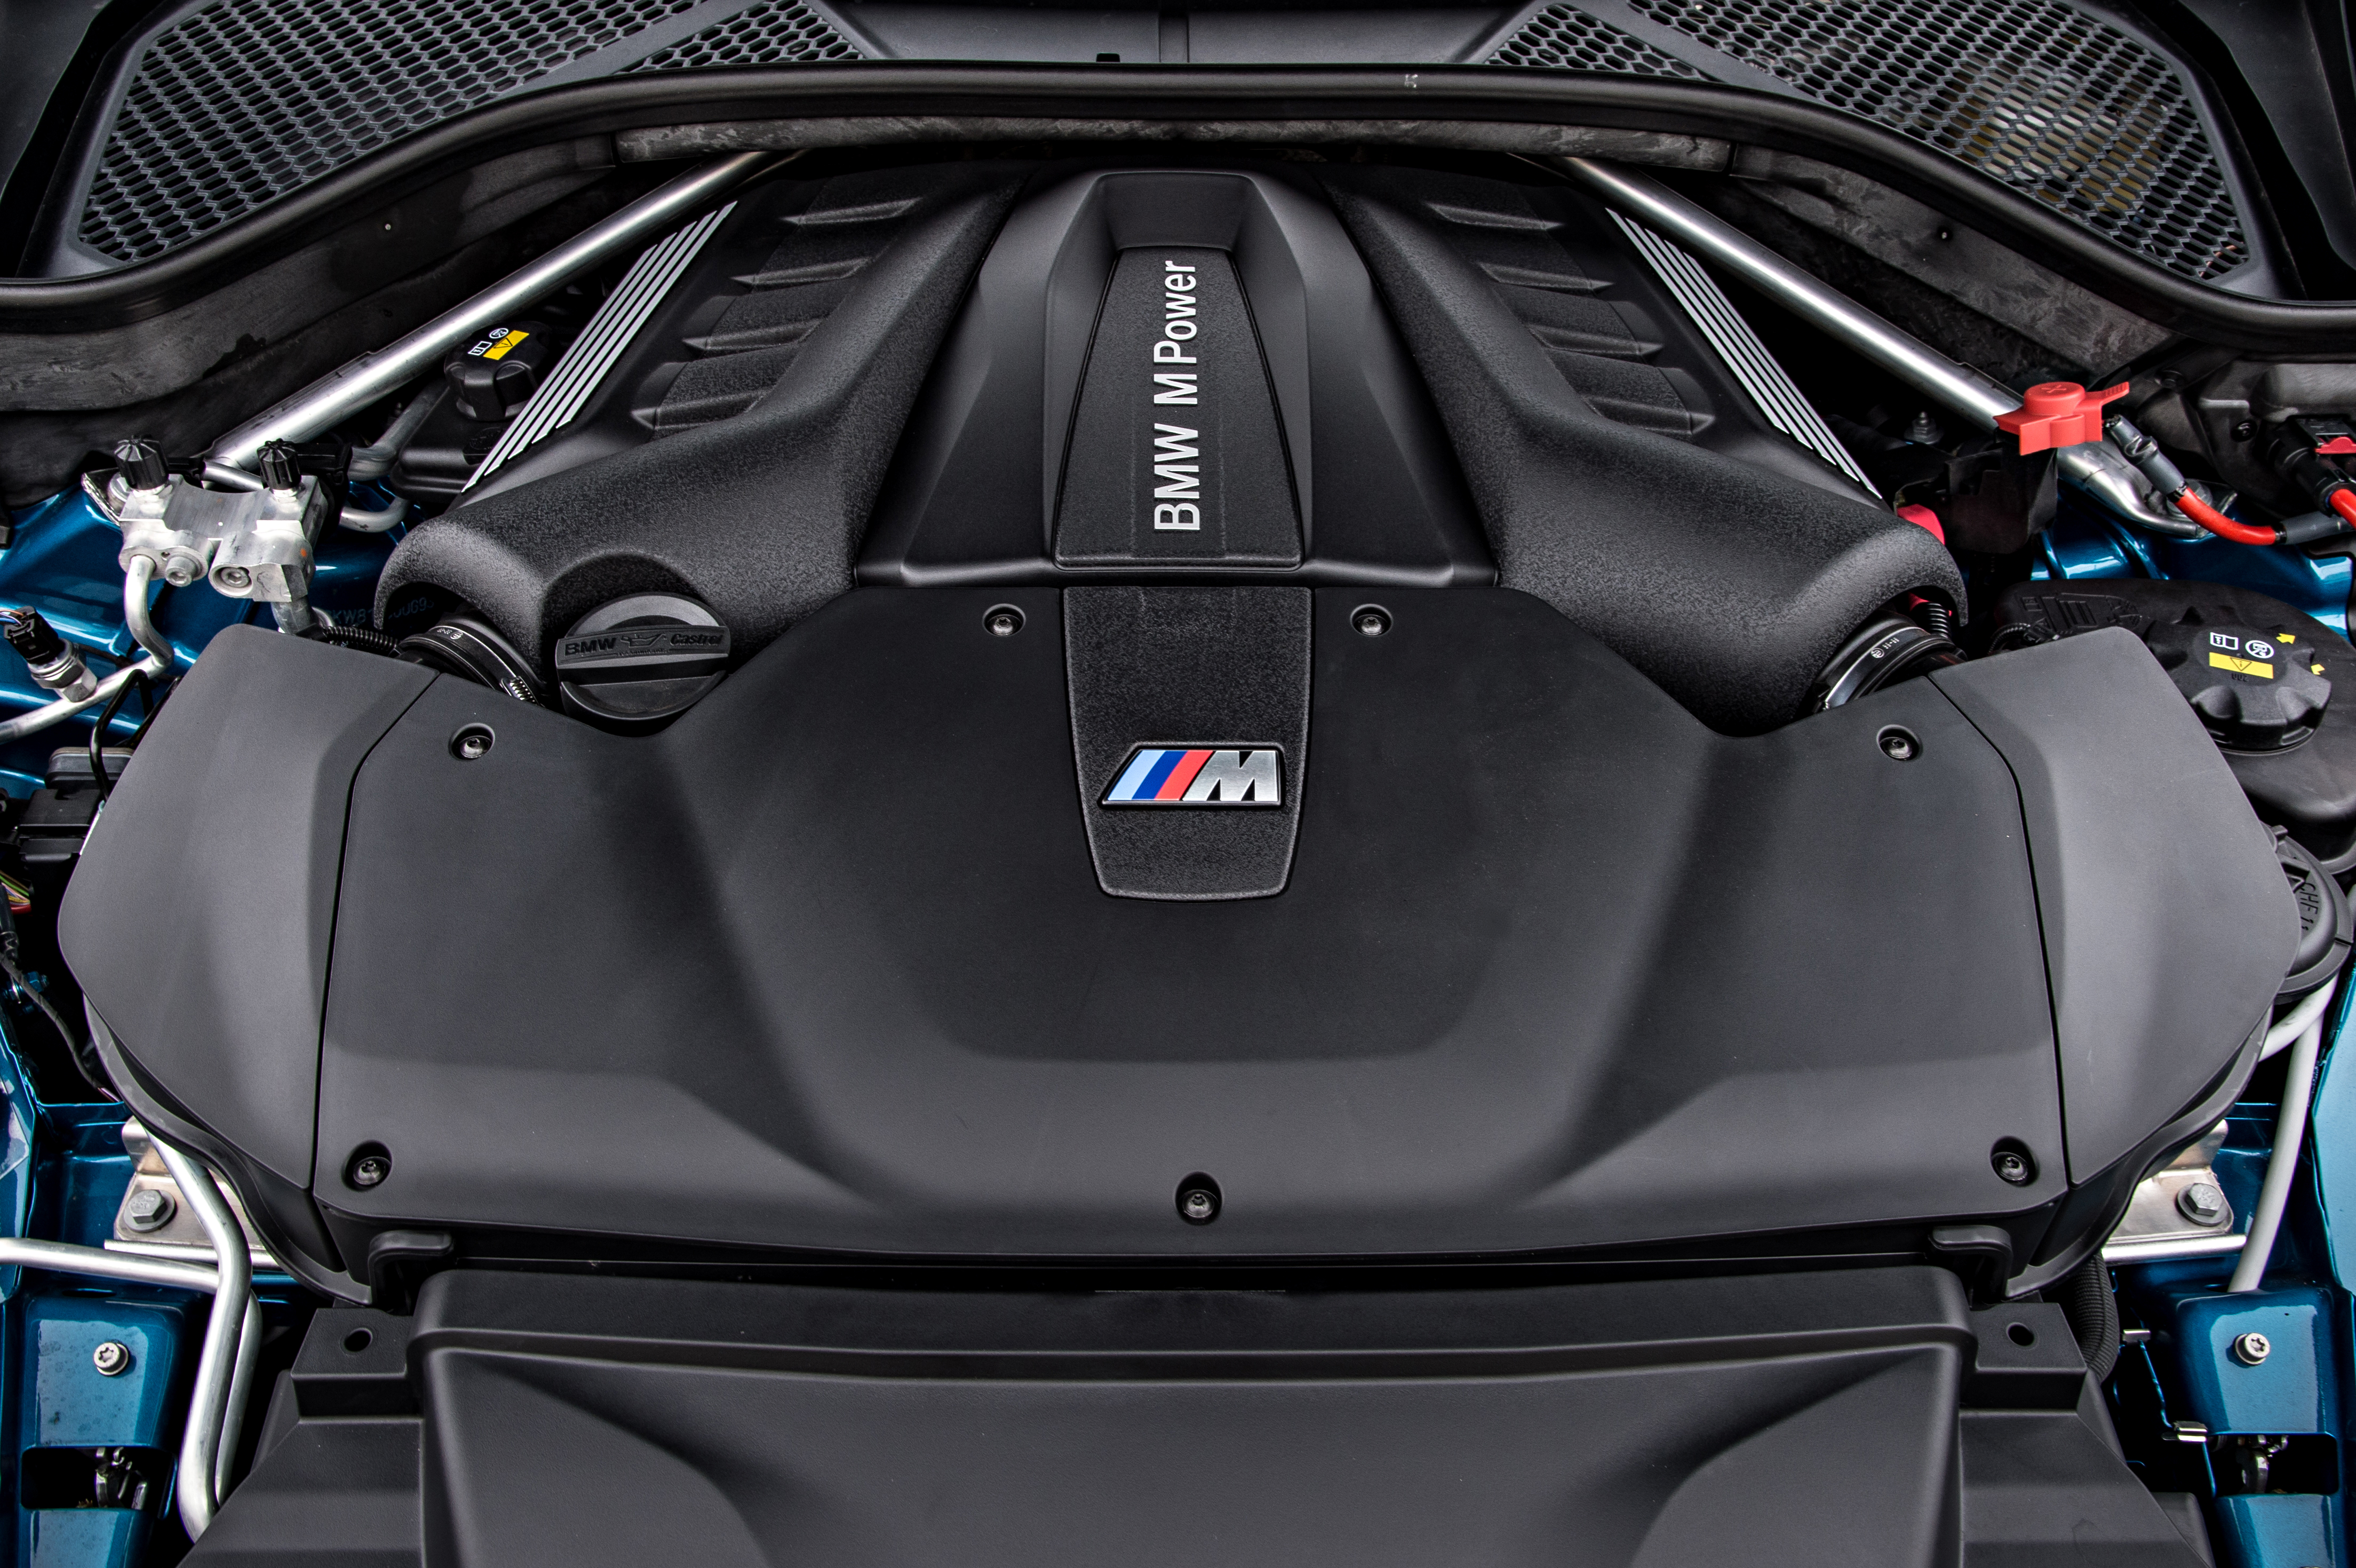 Bmw x6 двигатели. Двигатель BMW x6m. BMW x6 f16 мотор. Двигатель БМВ x6 m. BMW x5 m под капотом.